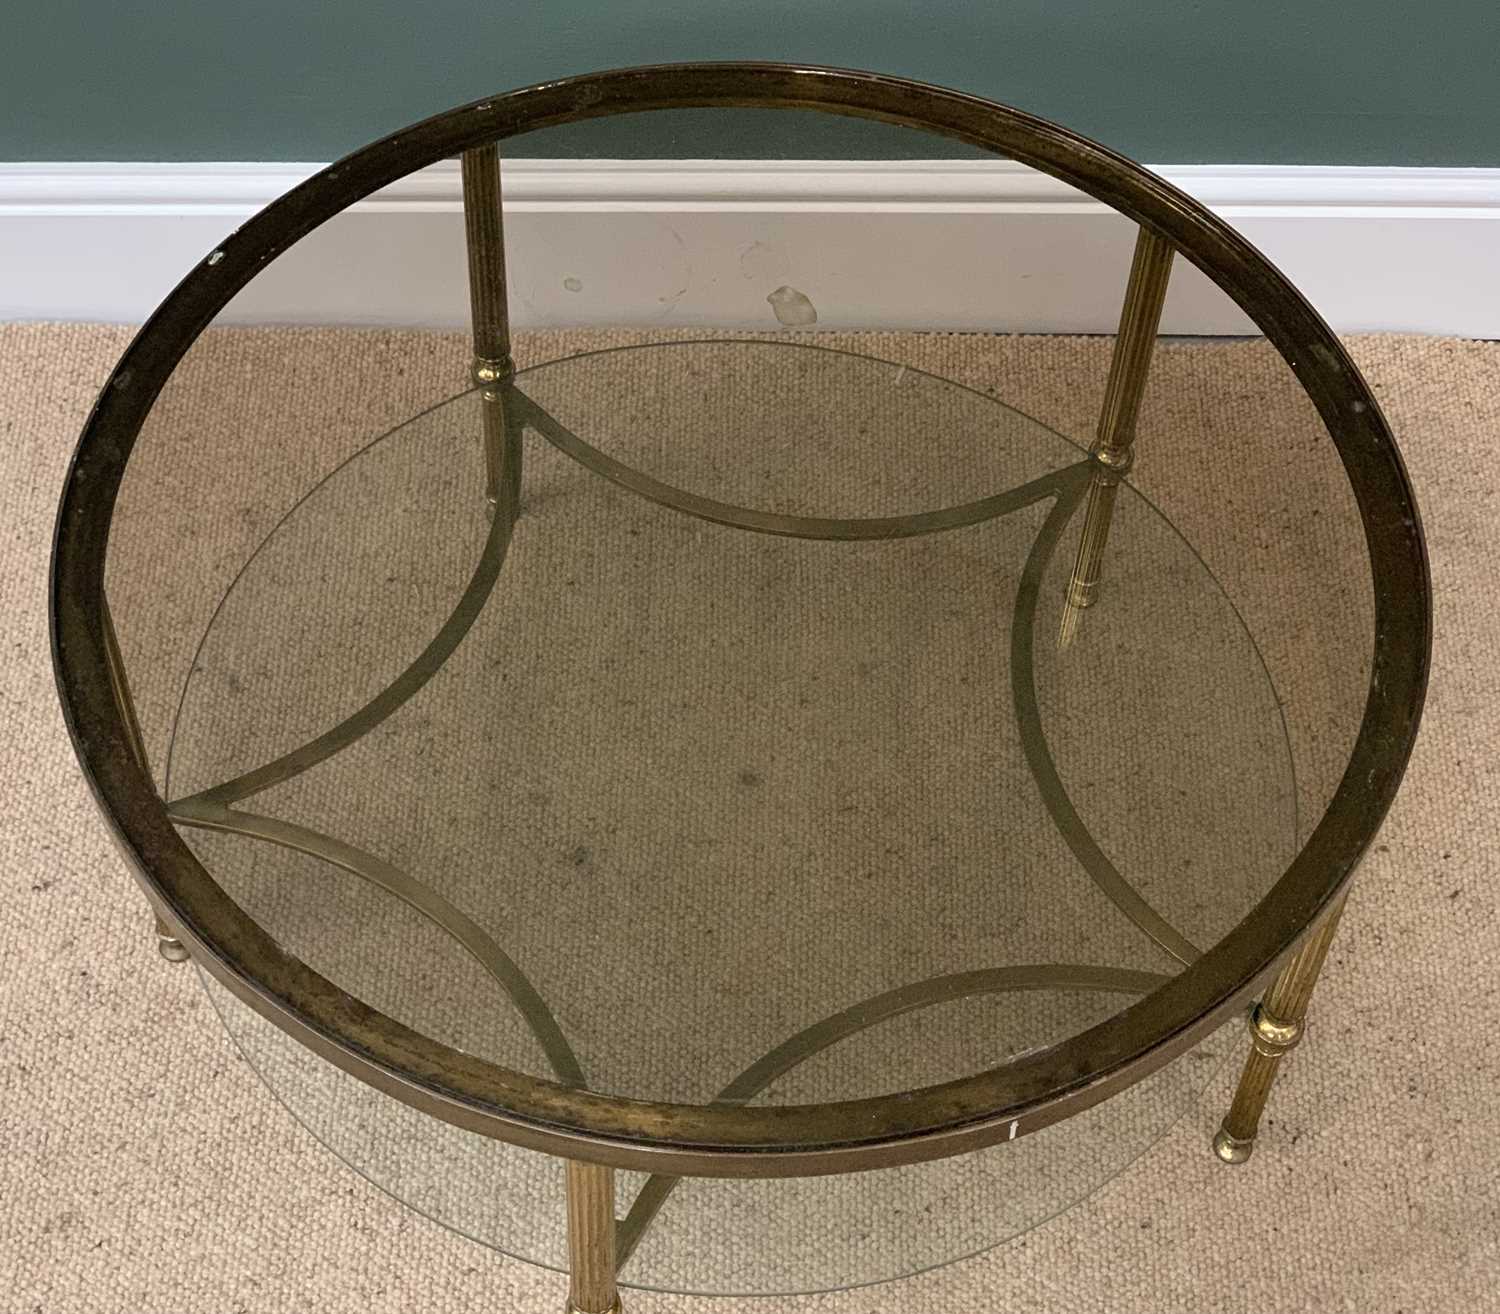 ART DECO STYLE GLASS & METAL CIRCULAR TABLE, 42cms H, 77cms diameter - Image 2 of 2